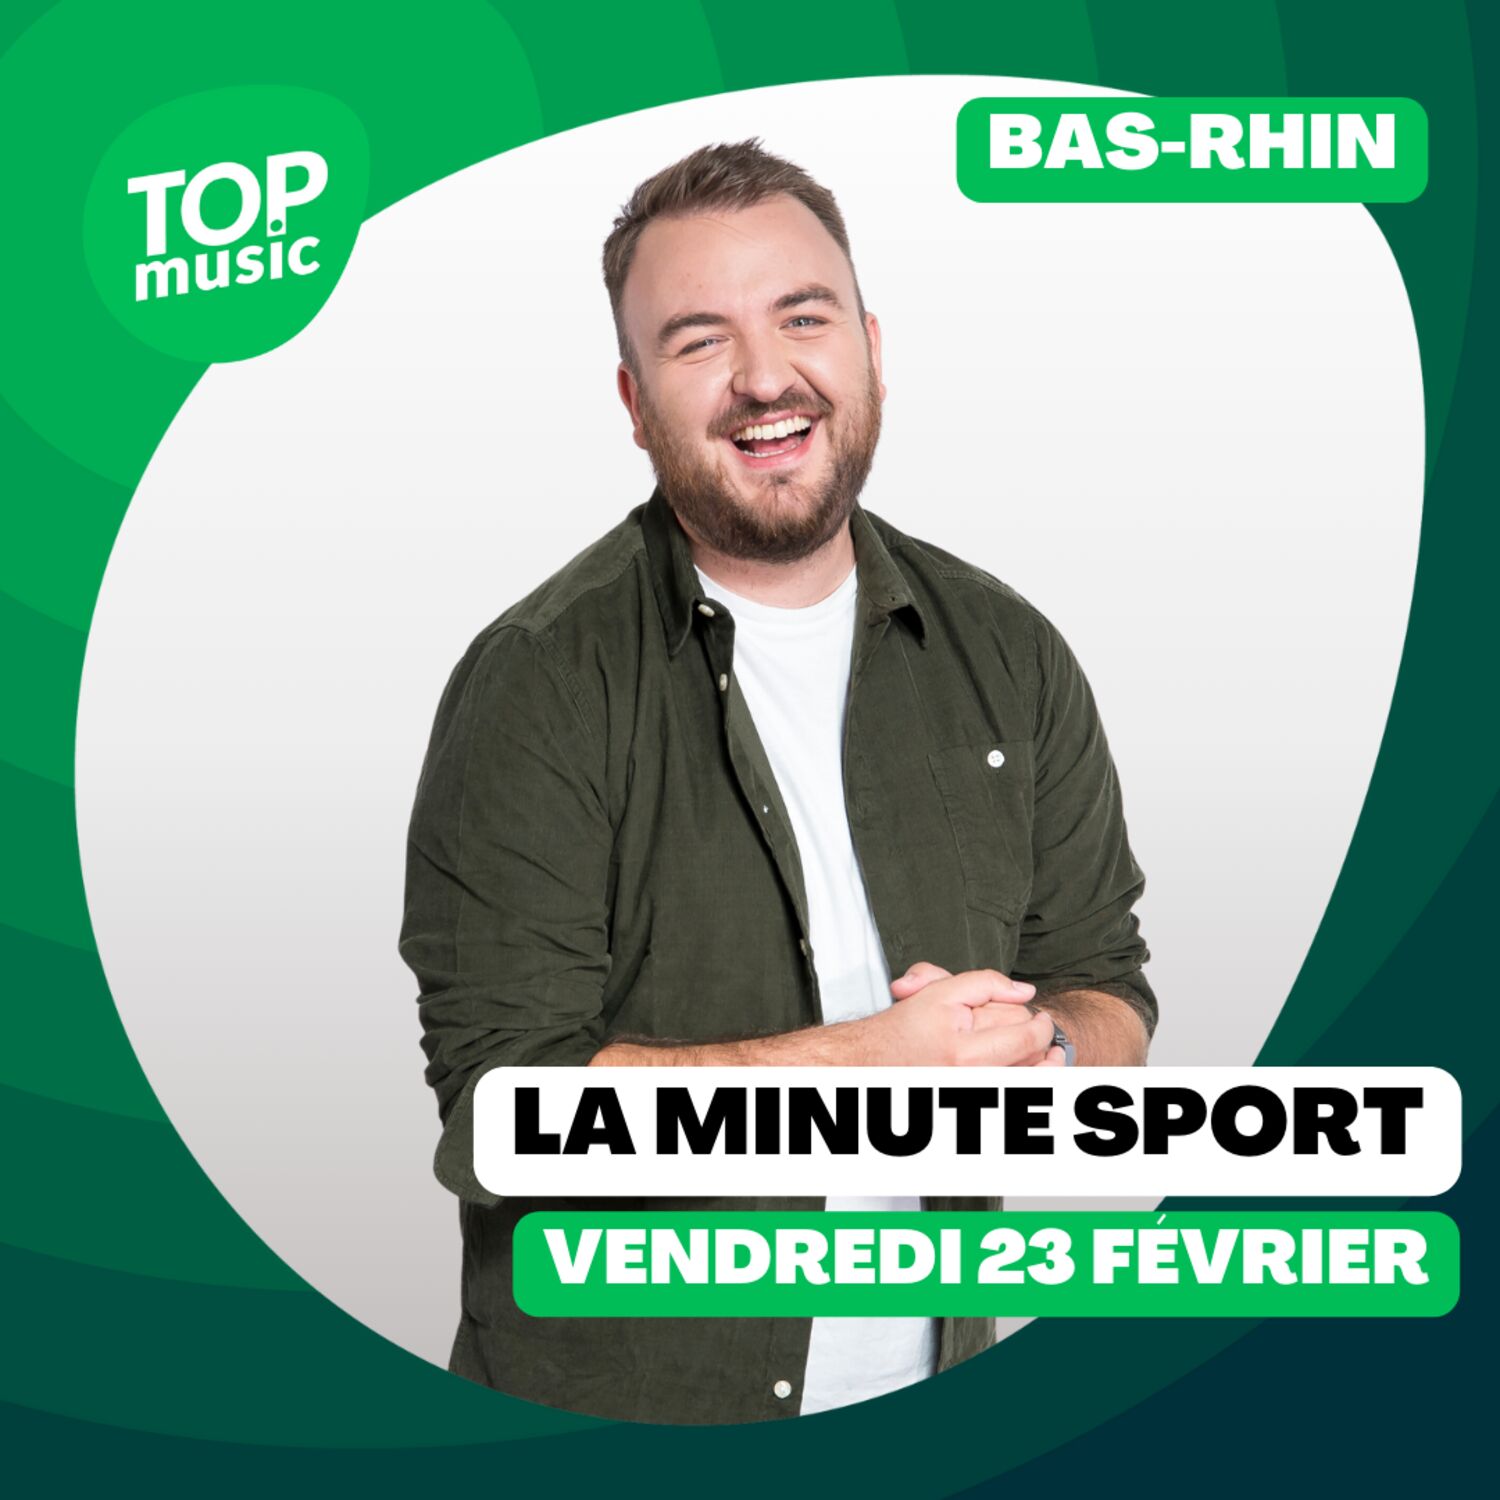 La Minute sport du Bas-Rhin - vendredi 23 février